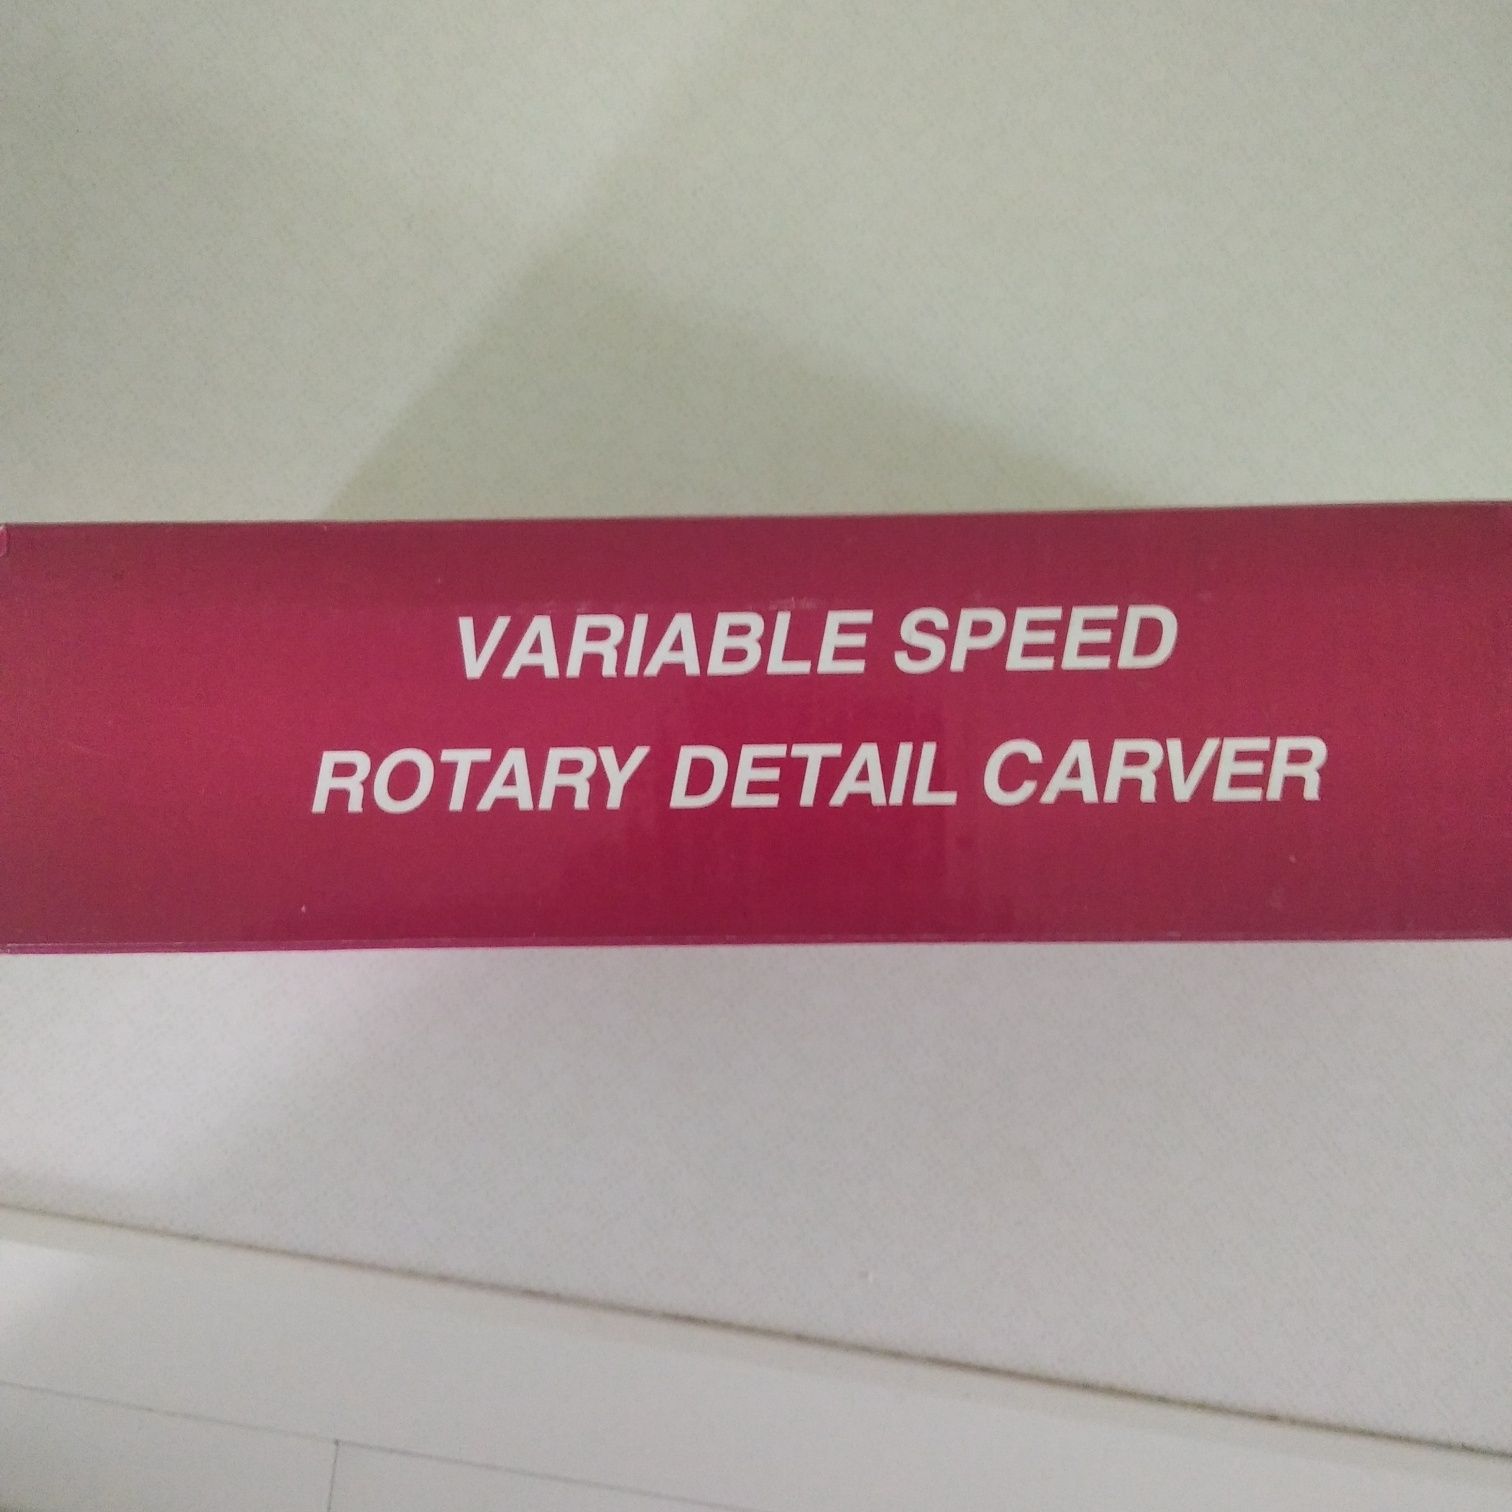 Аппарат для маникюра и педикюра Variable speed rotary detail carver